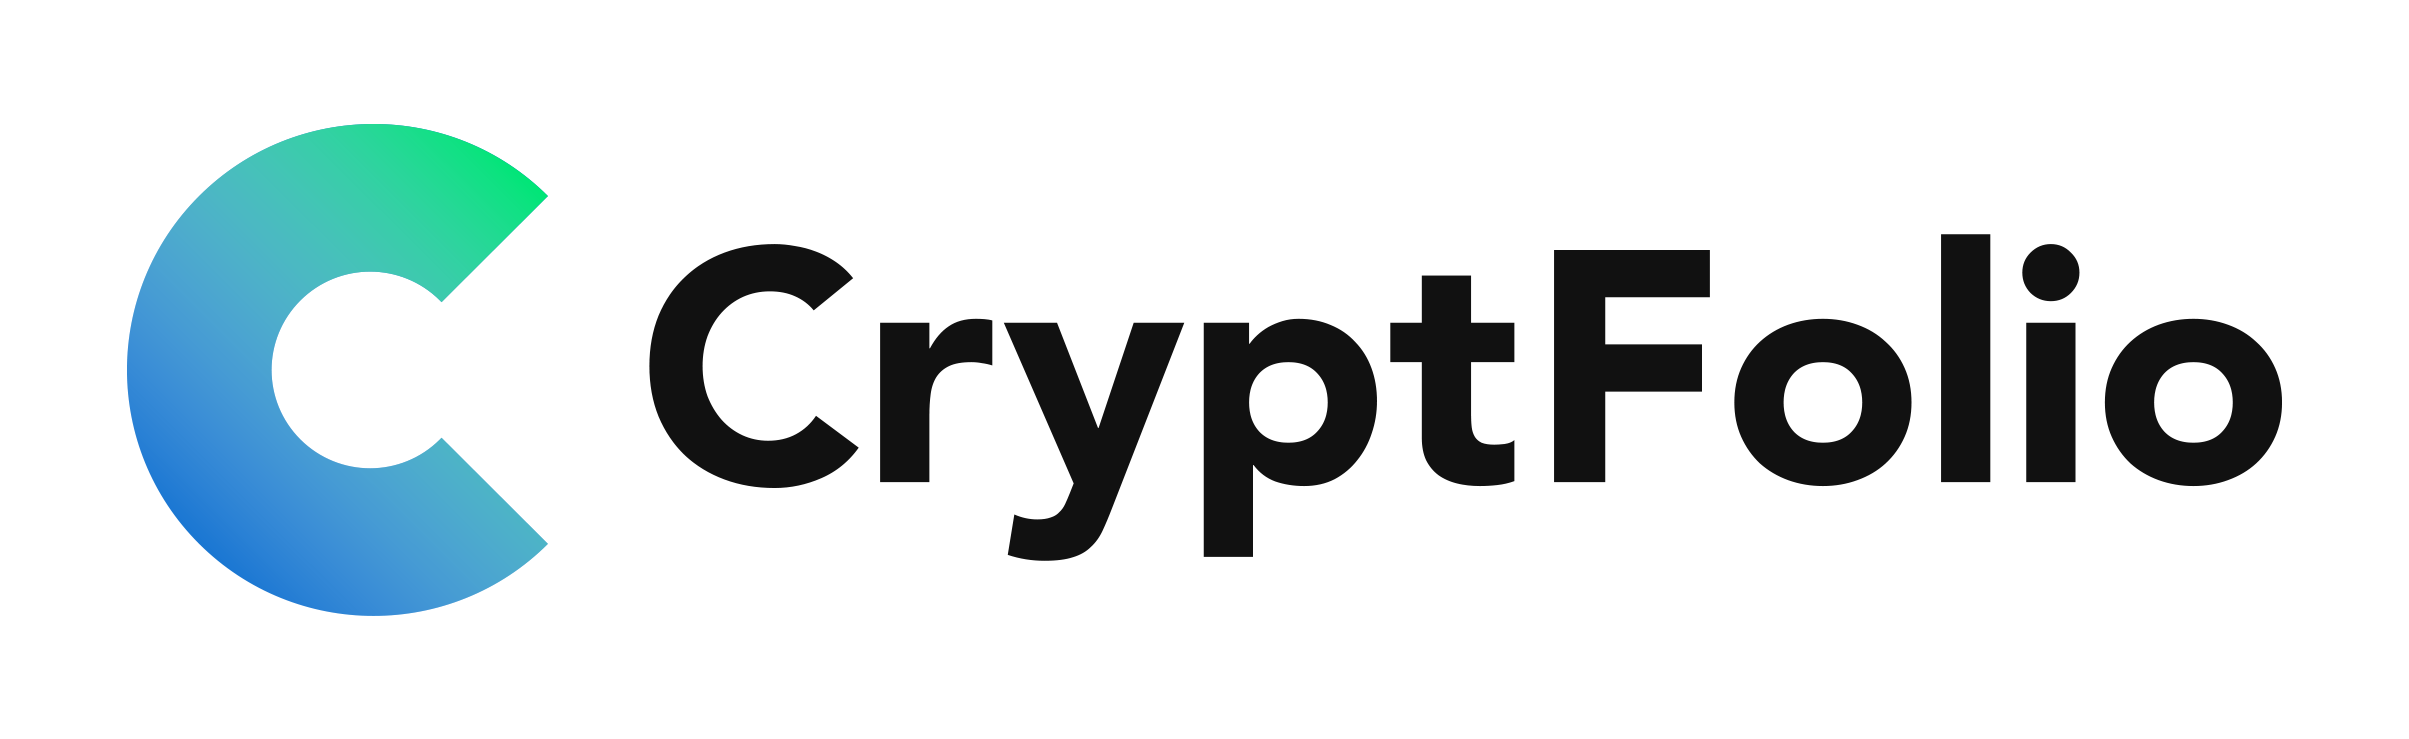 CryptFolio company logo